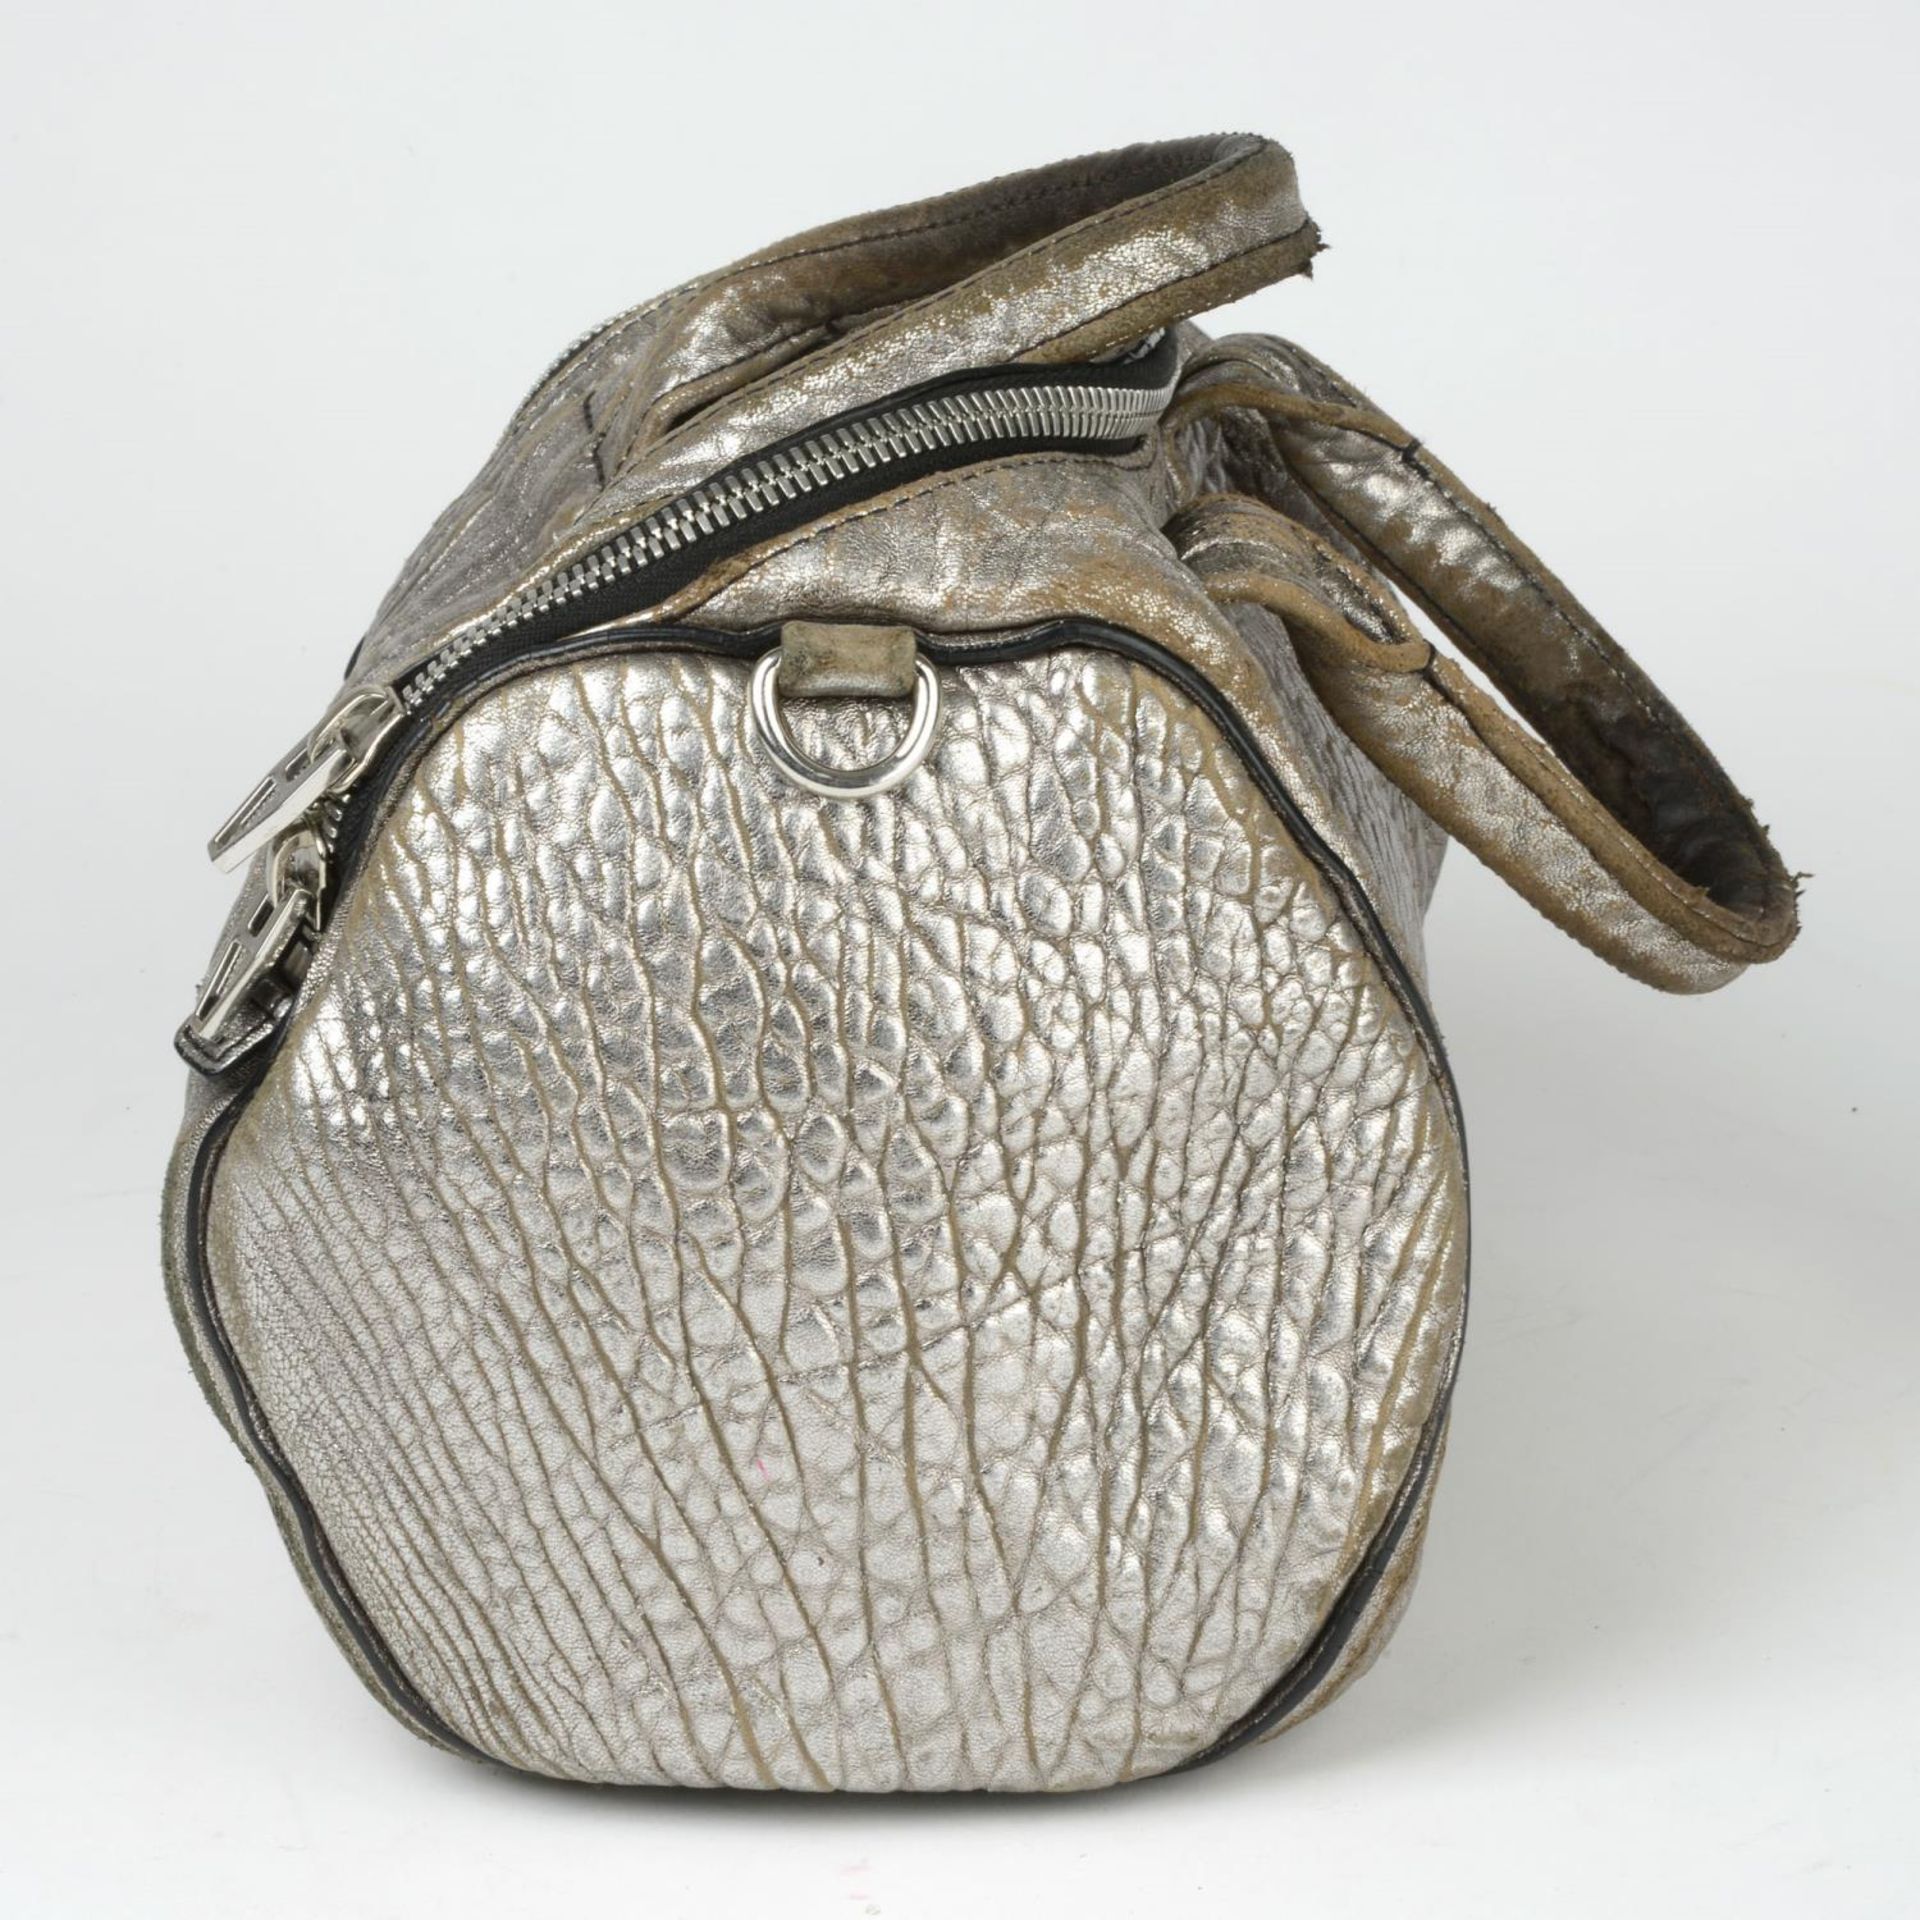 ALEXANDER WANG - a Rockie leather handbag. - Bild 4 aus 5